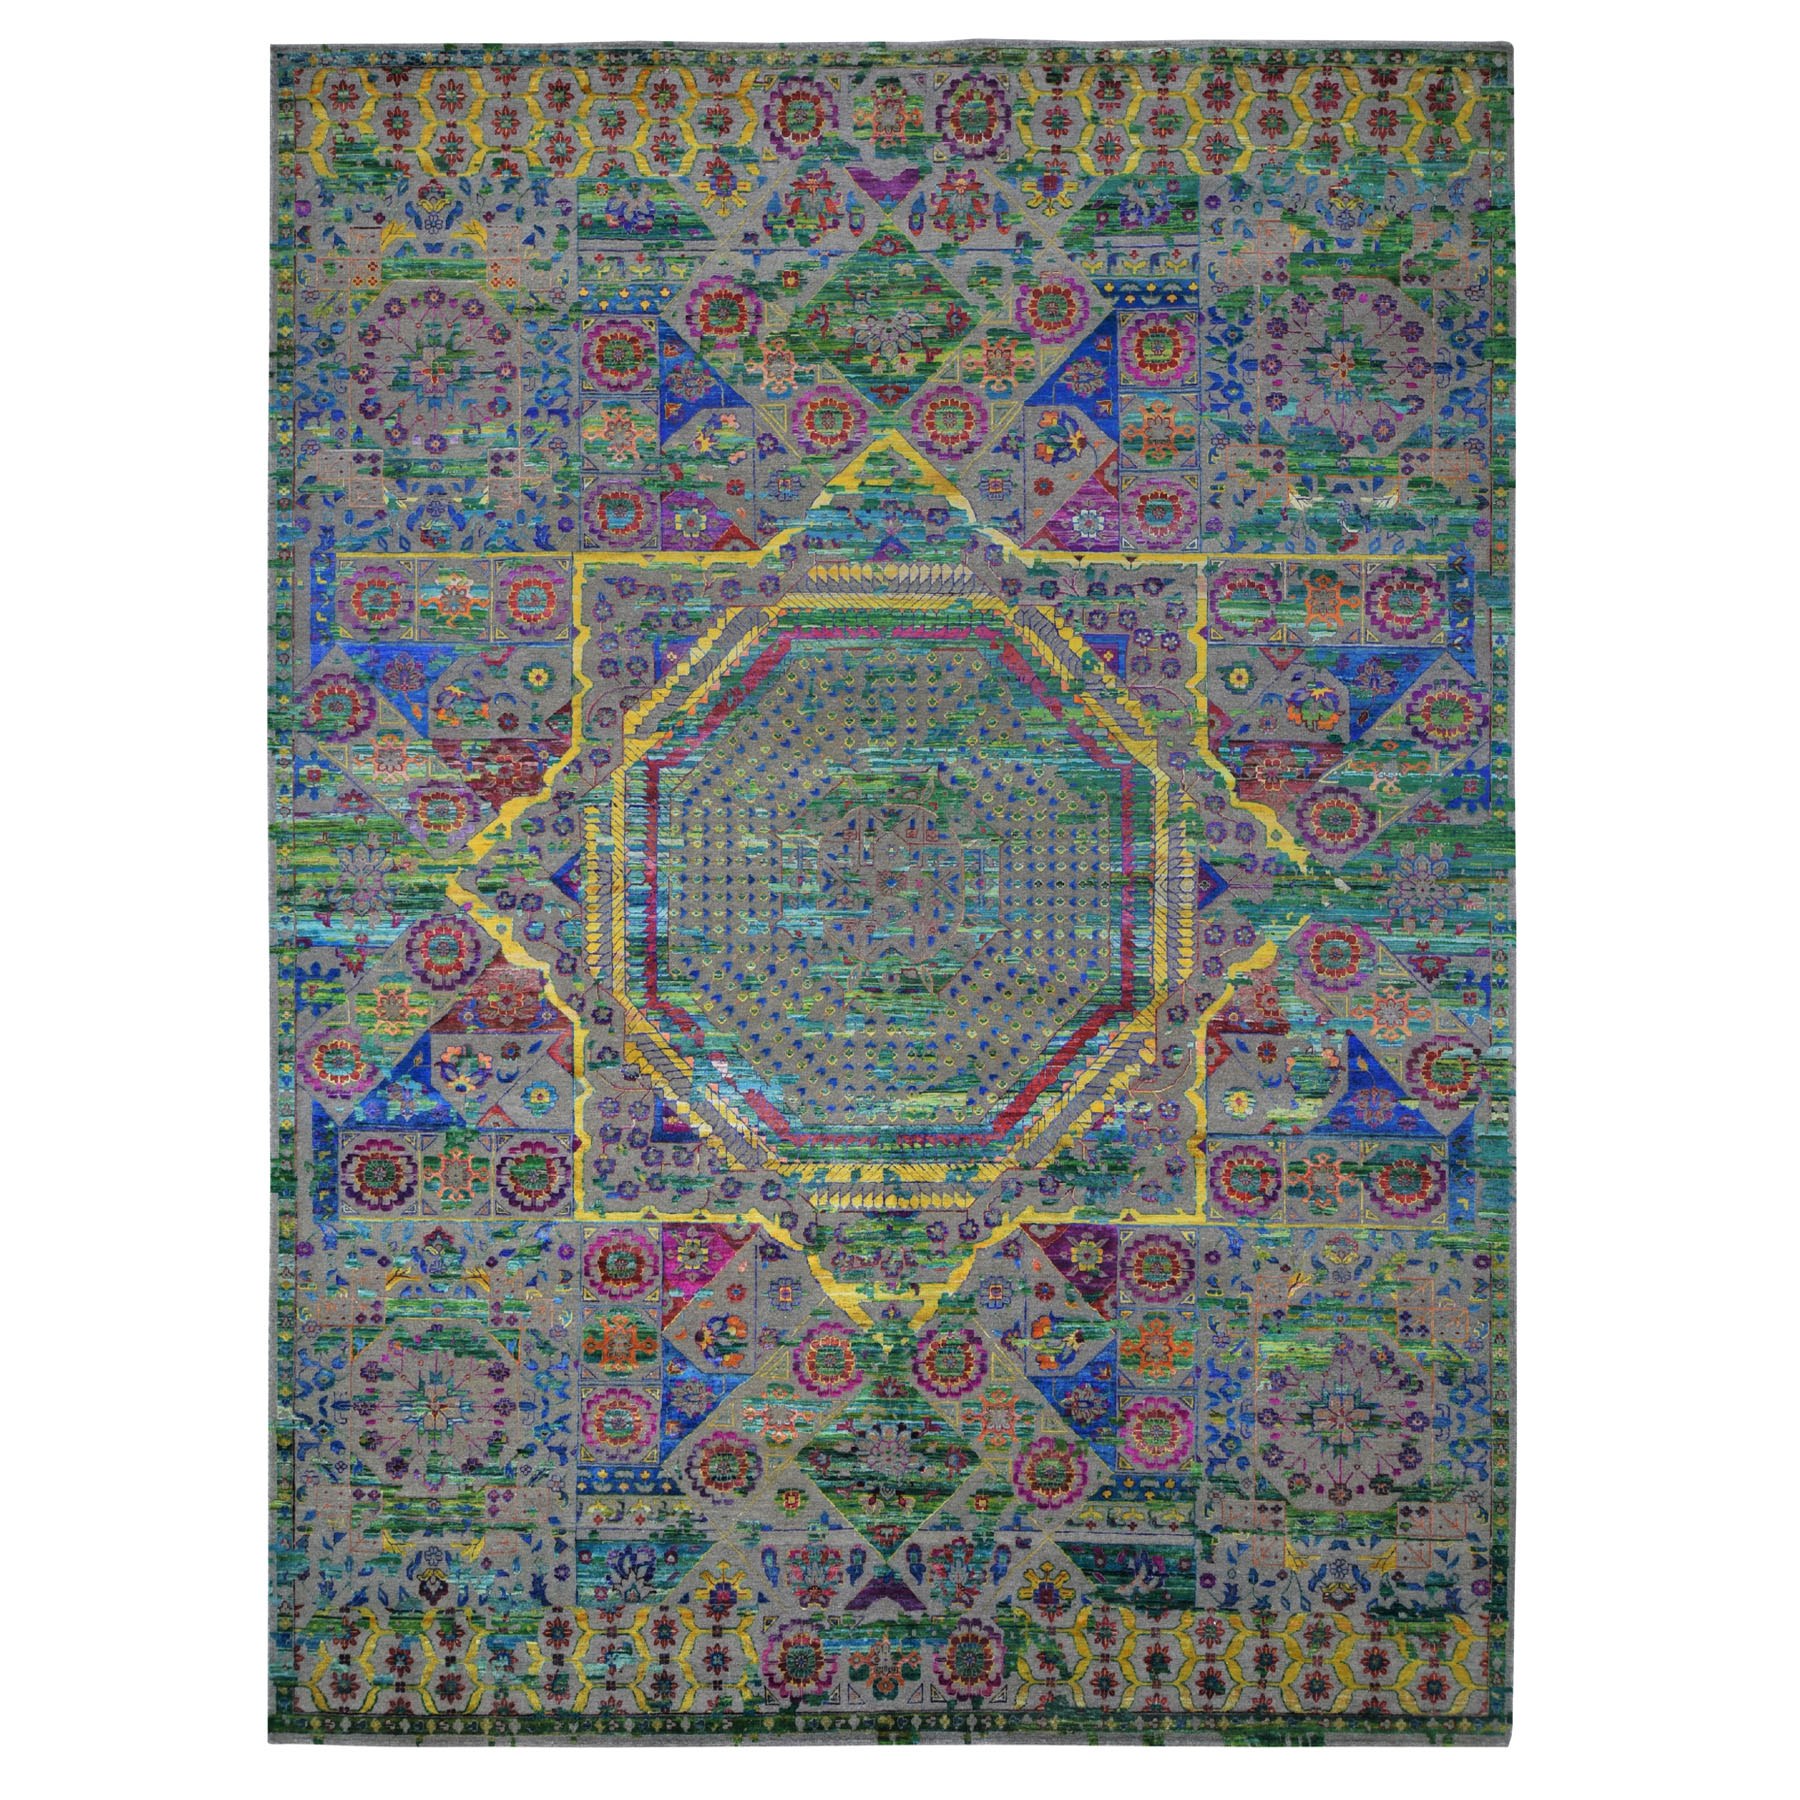 10'x14' Colorful Sari Silk Mamluk Design Hand Woven Oriental Rug 